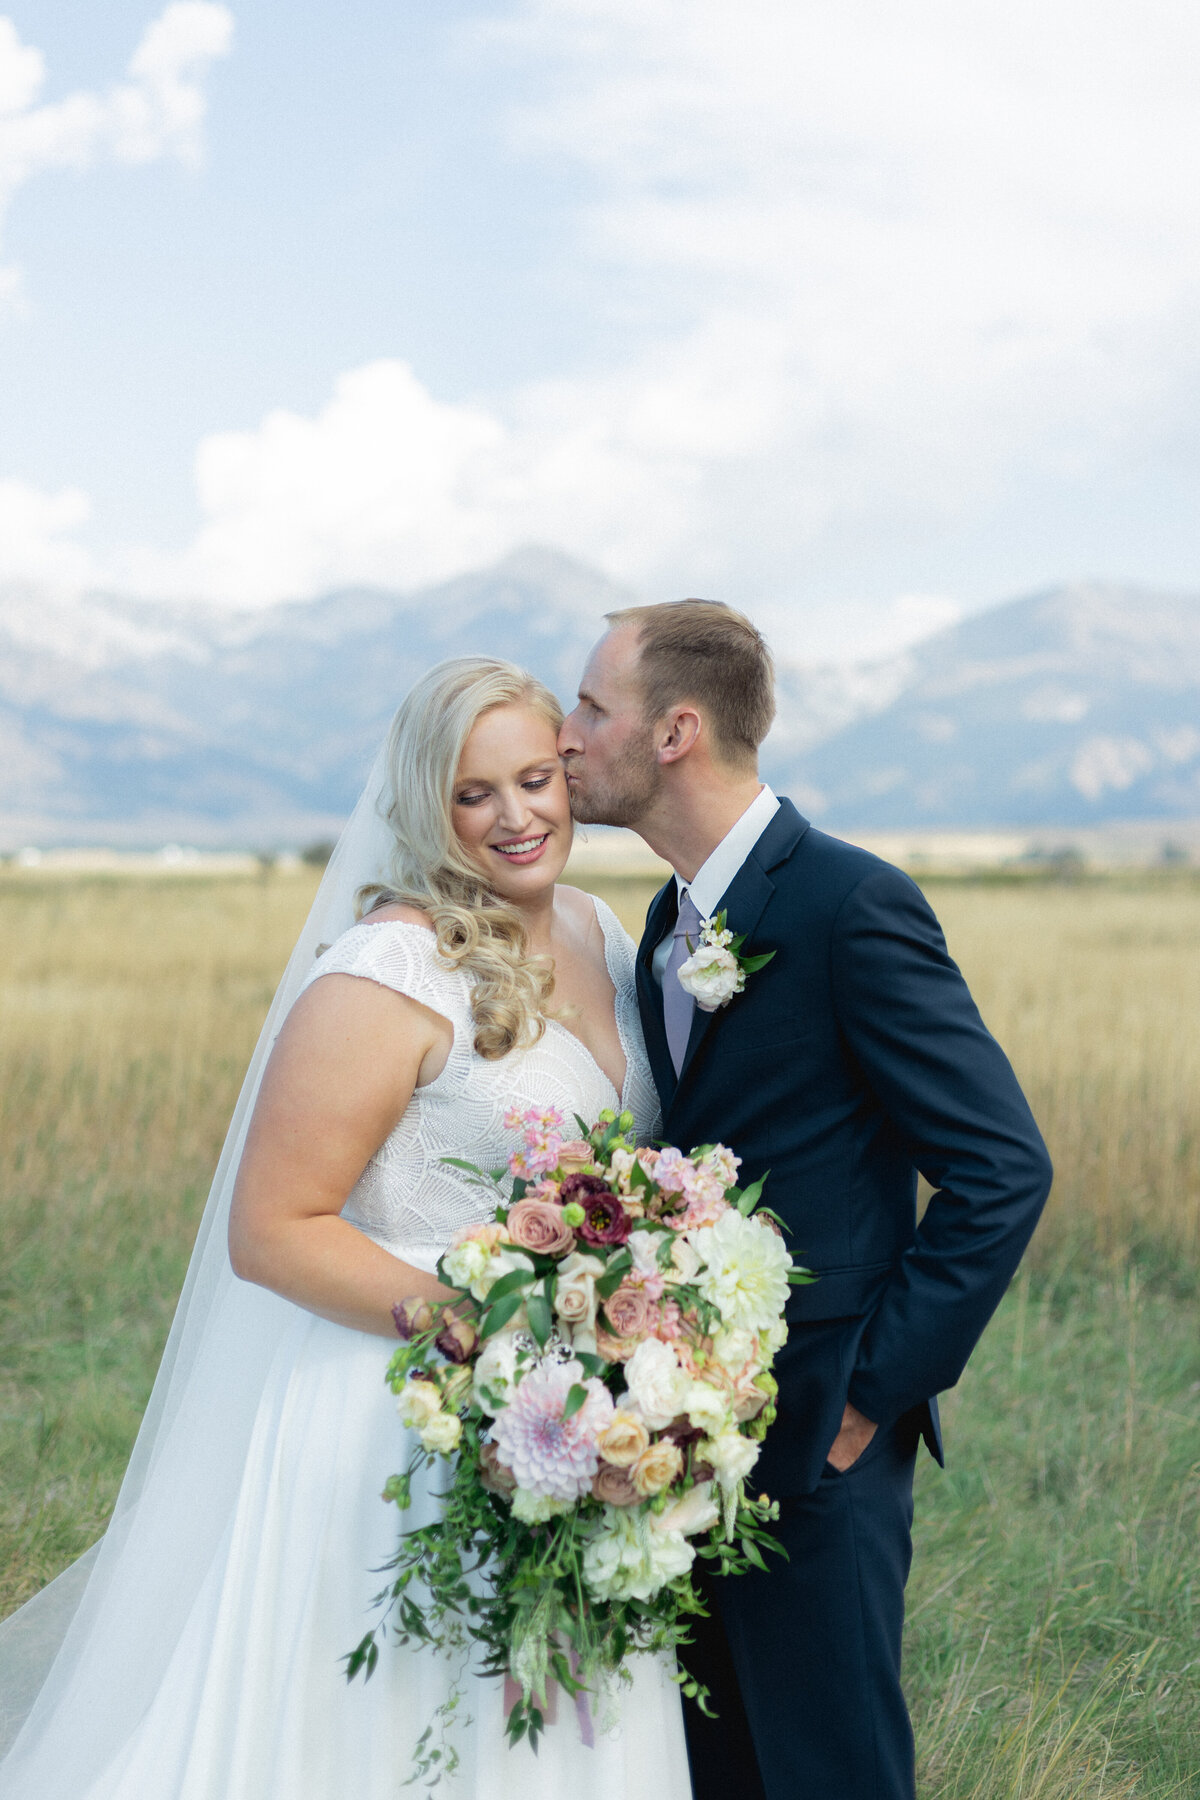 Groom kisses bride at mountain wedding